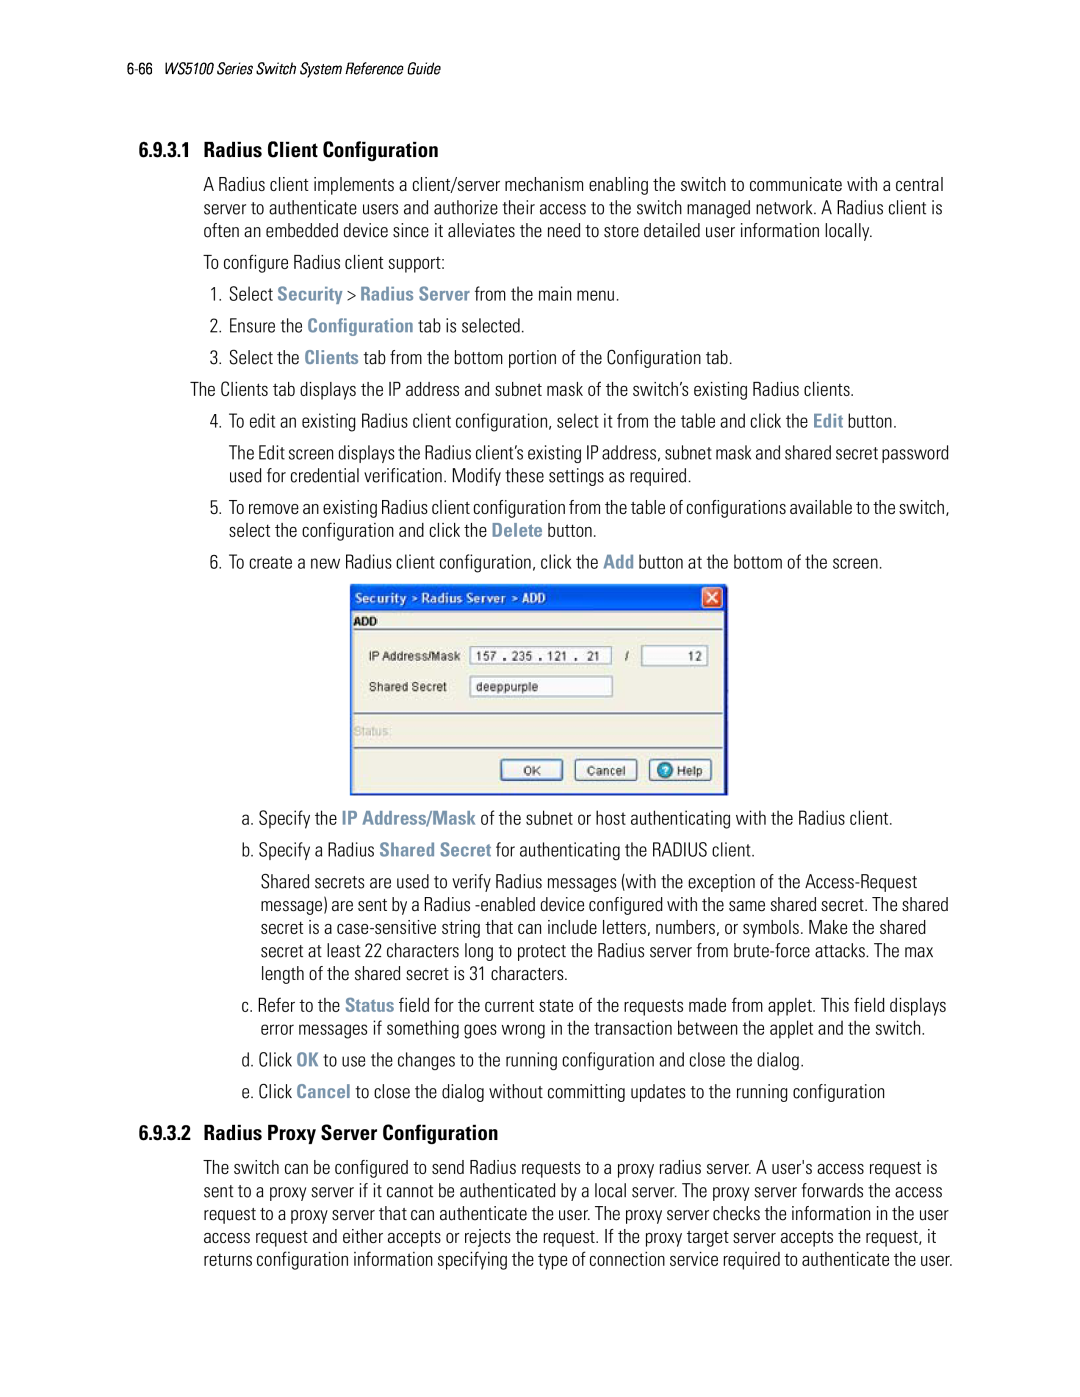 Motorola WS5100 manual 6.9.3.1Radius Client Configuration, 6.9.3.2Radius Proxy Server Configuration 